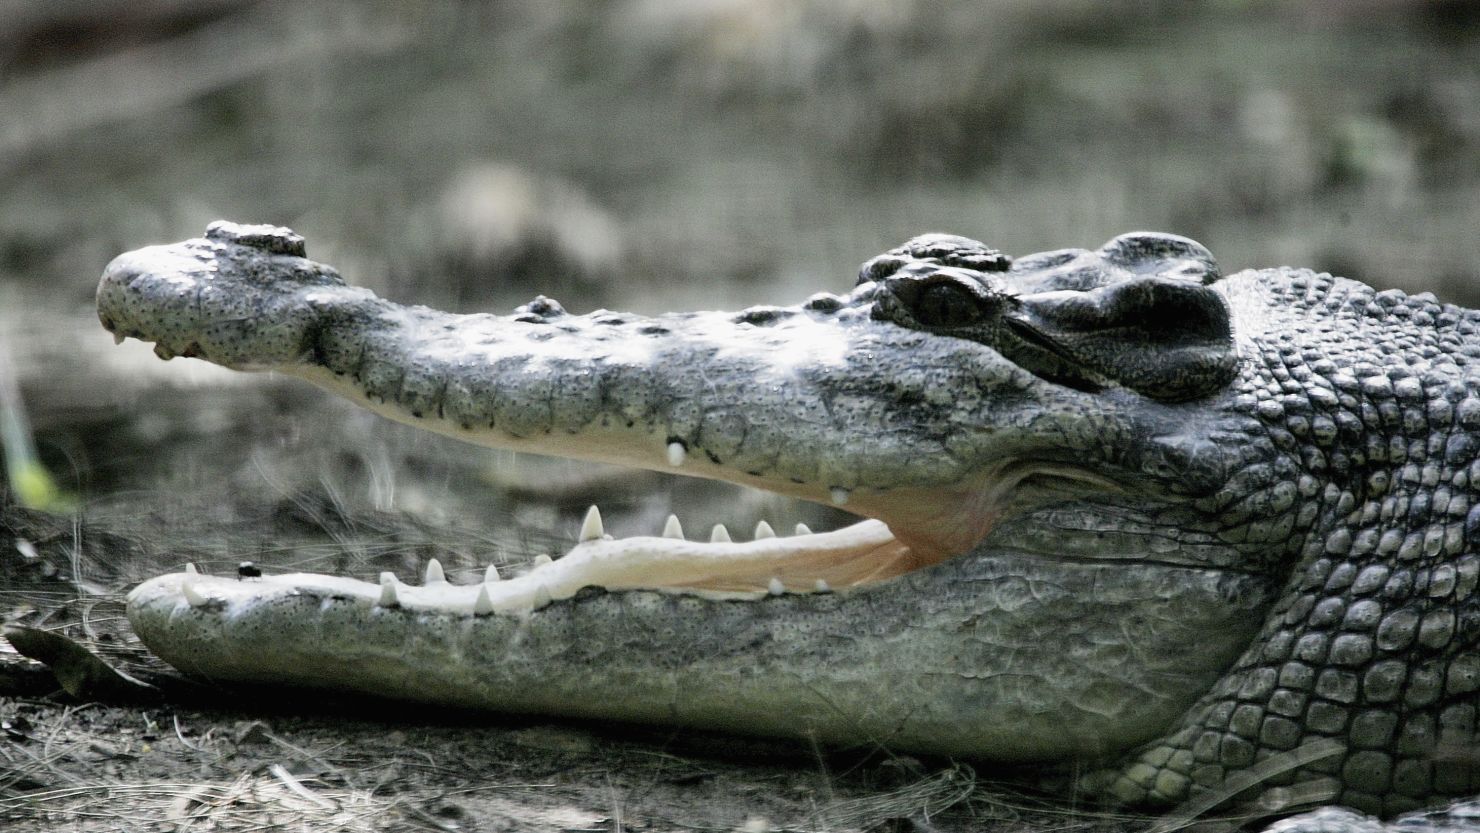 File photo of saltwater Crocodile, Australia's most dangerous predator.